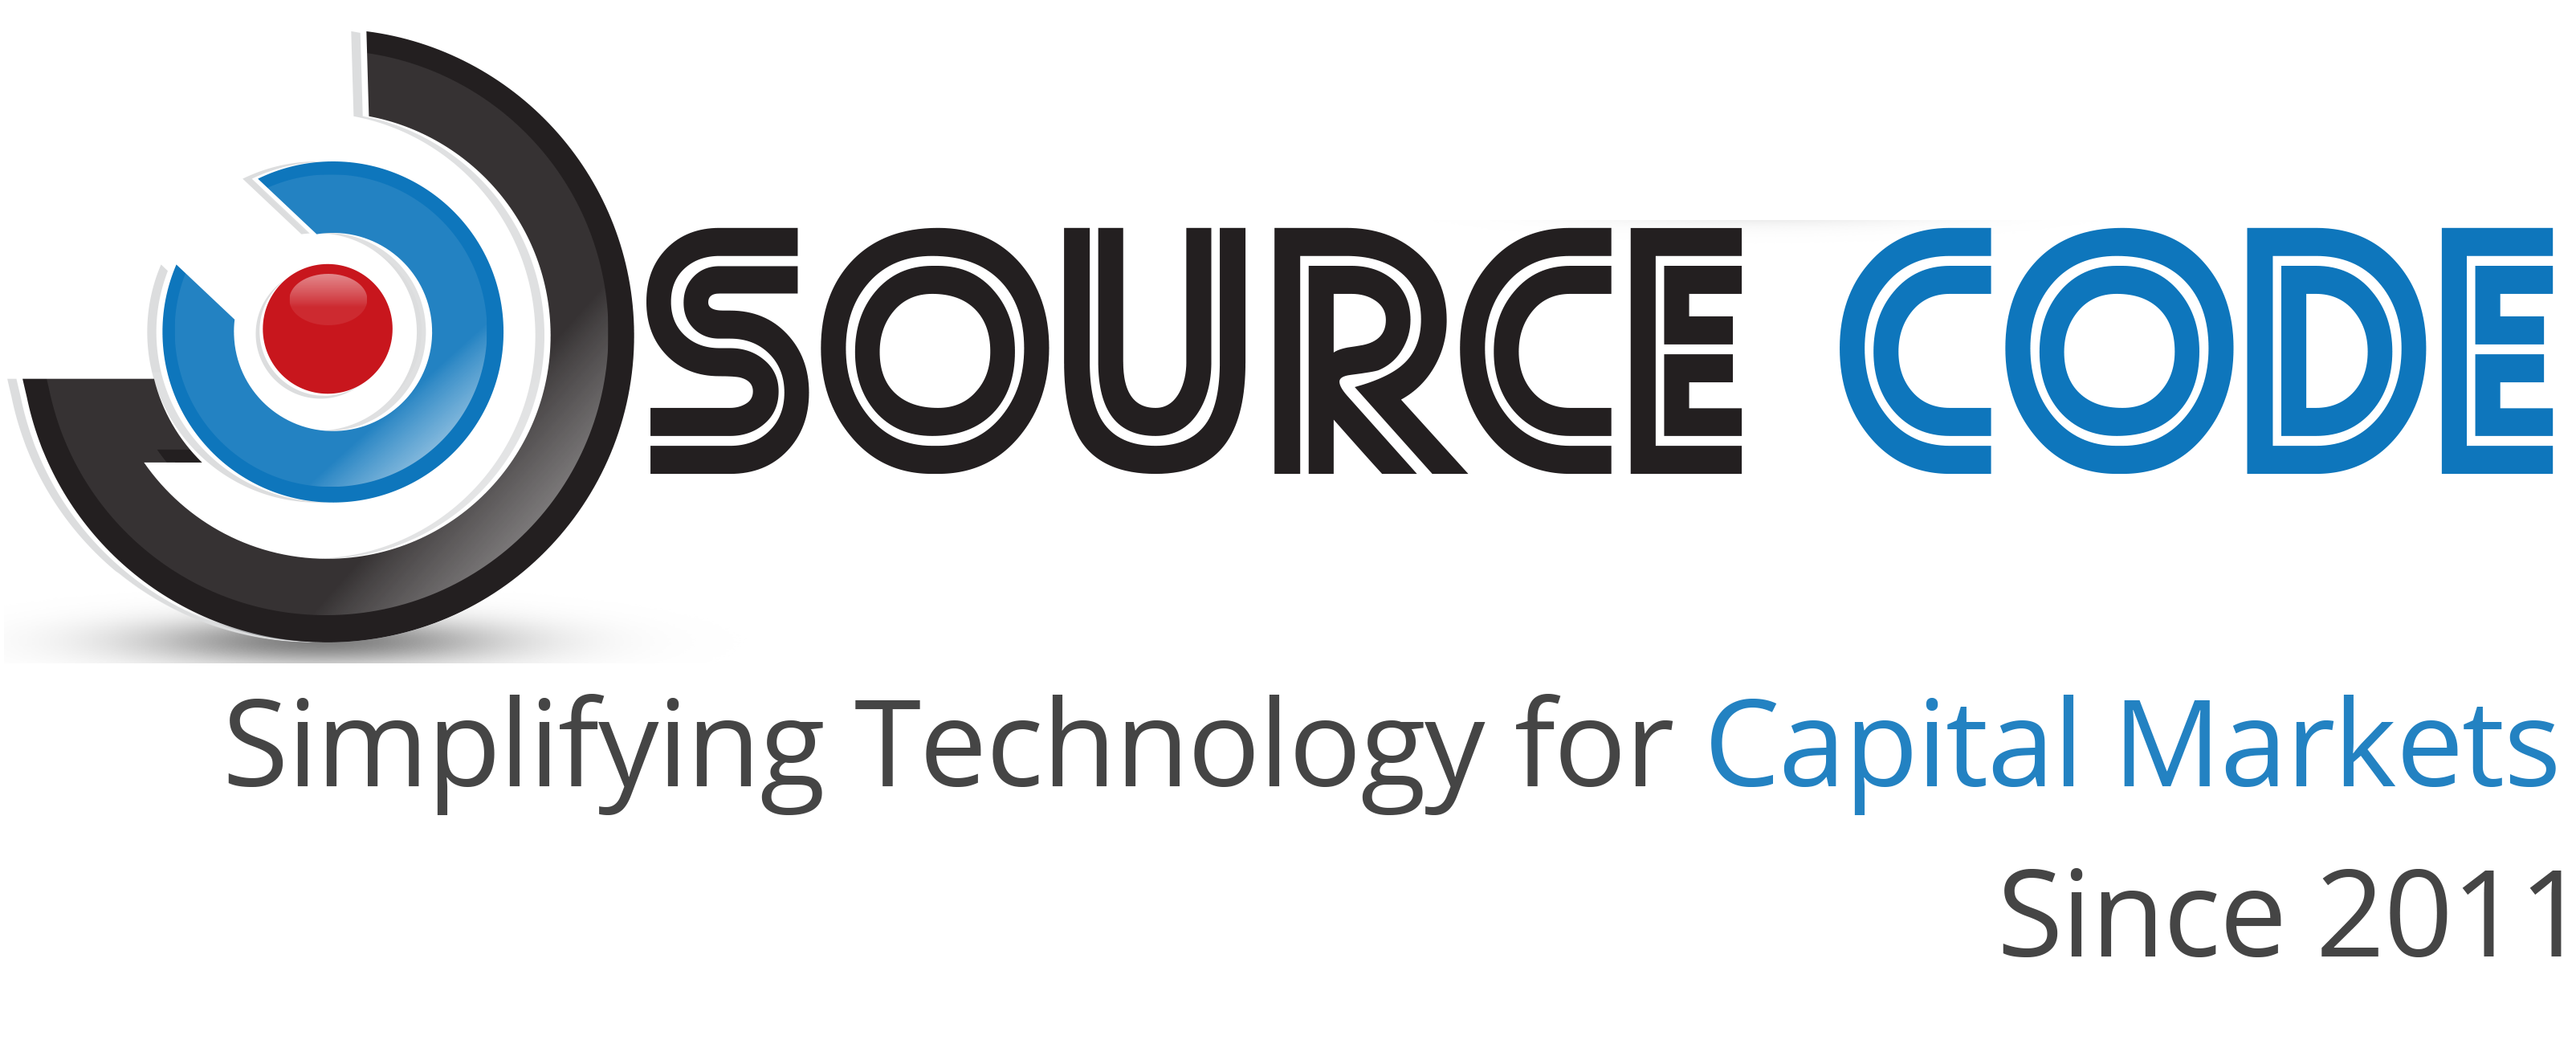 source code logo